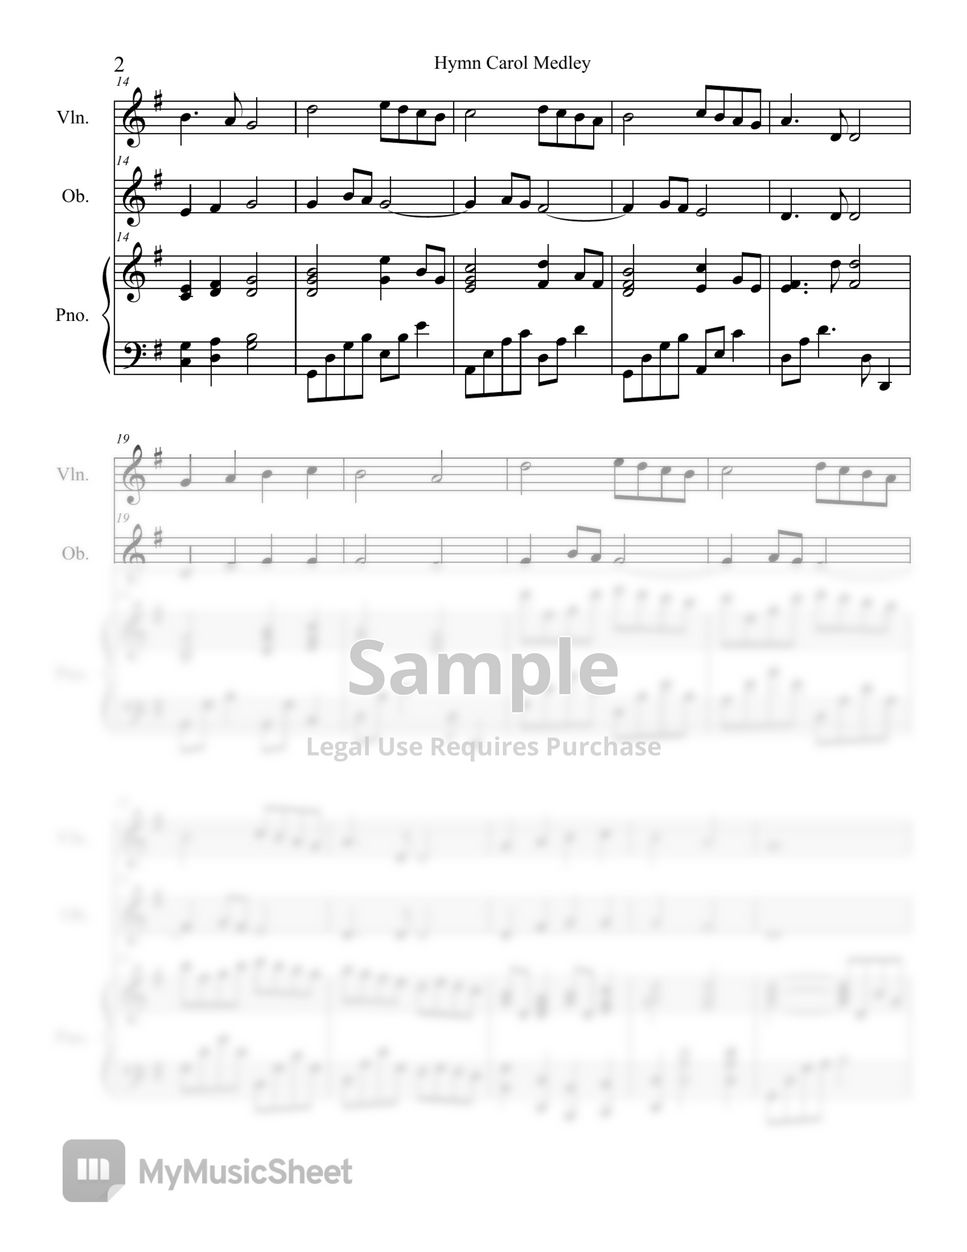 Traditional FrenchMelody, Arr. by E.S.Barnes/ F.Mendelssohn, Arr. by W.H. Cummings/ G.F.Handel Arr. by L.Mason - Christmas Carol Medley No.1 (Piano Trio(Vn. Ob. Pf.)) by Pianist Jin